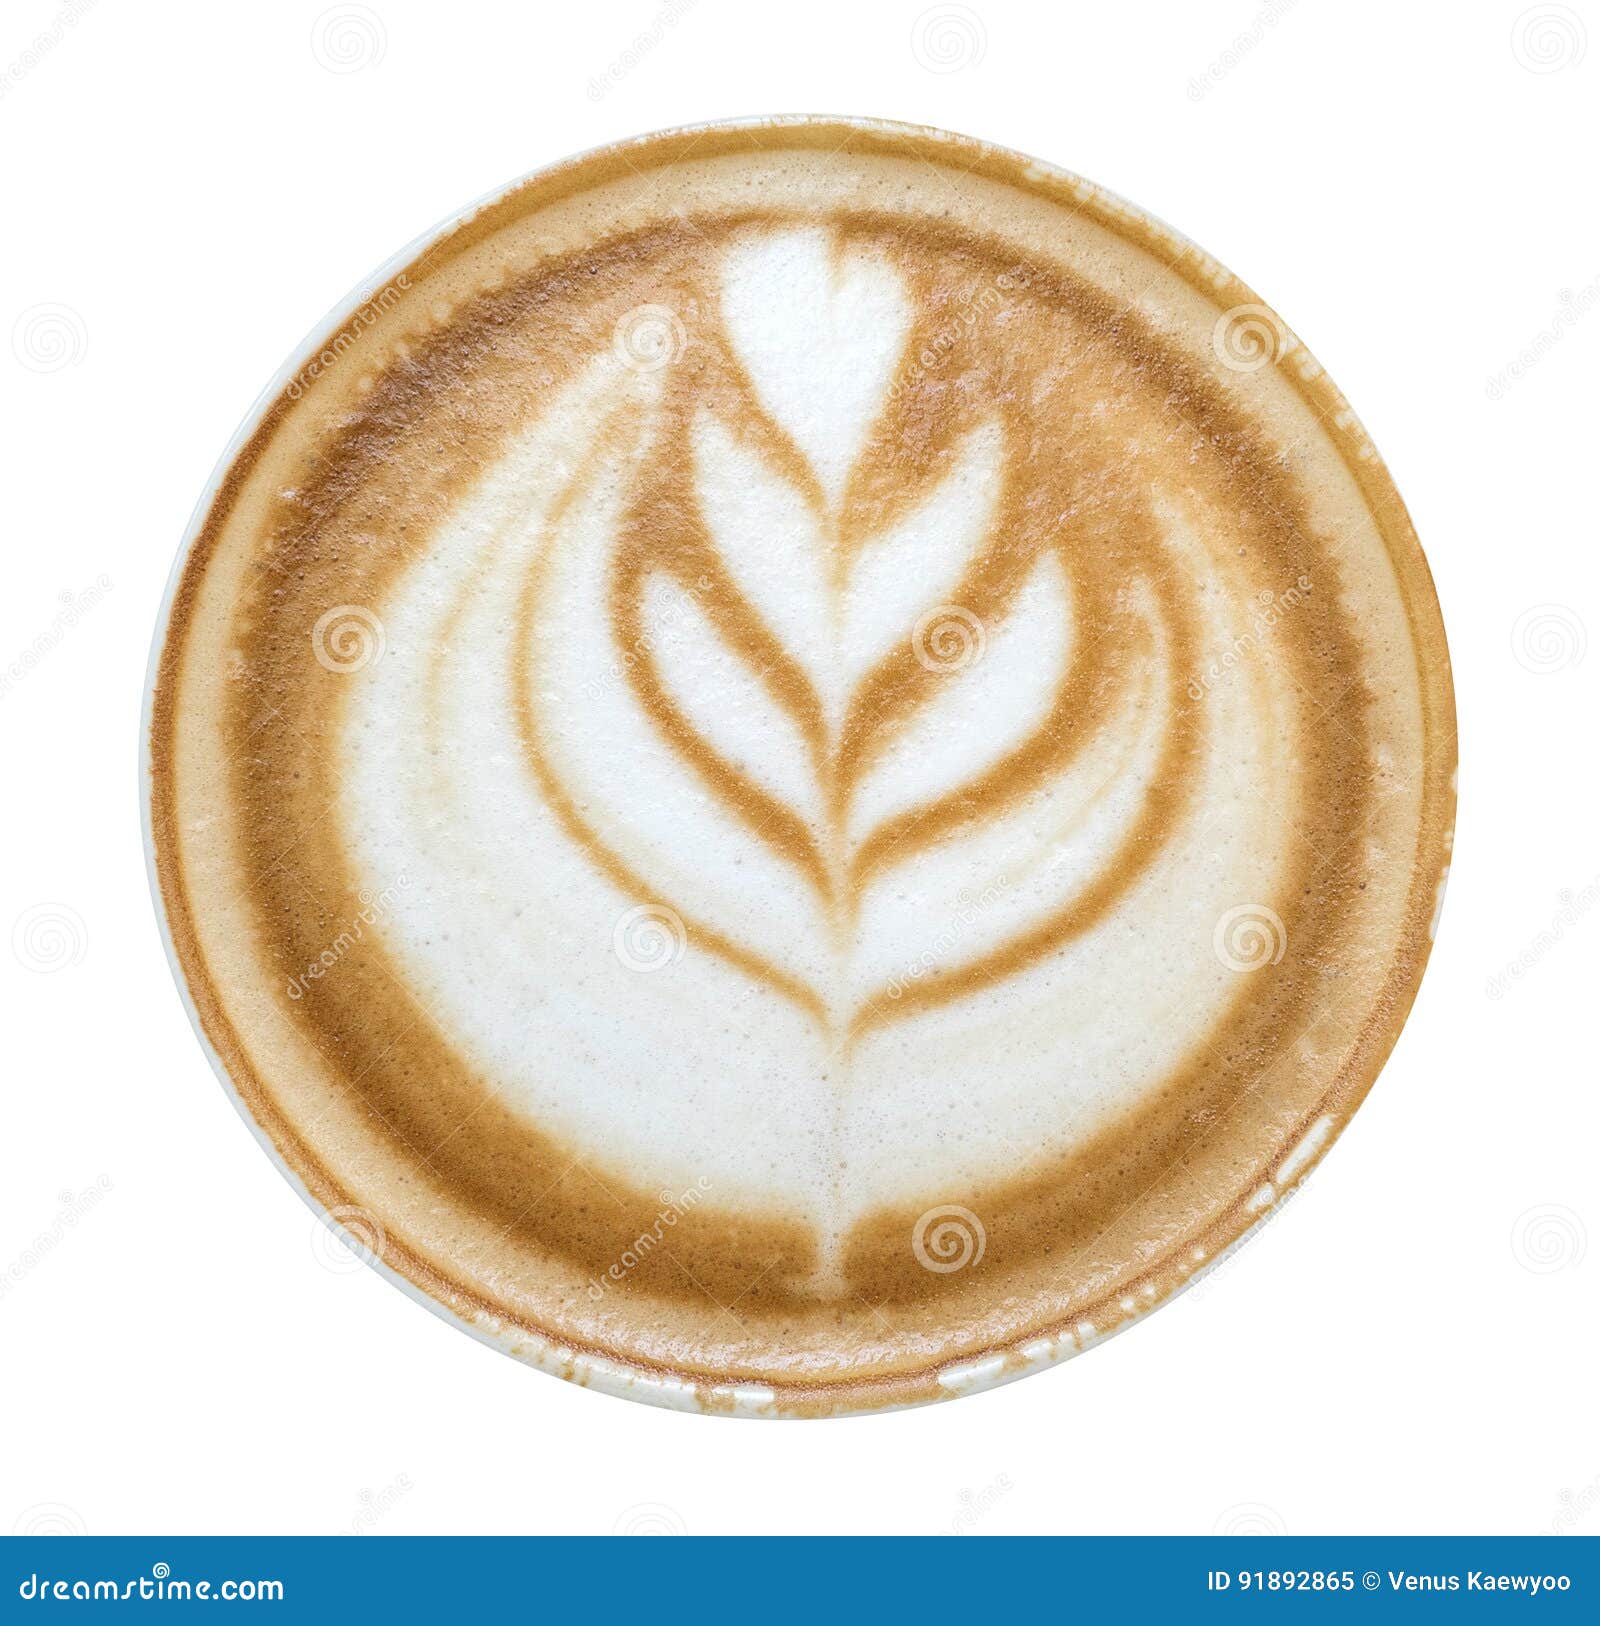 https://thumbs.dreamstime.com/z/latte-art-coffee-foam-top-view-white-background-latte-art-coffee-foam-flower-shape-top-view-white-background-91892865.jpg